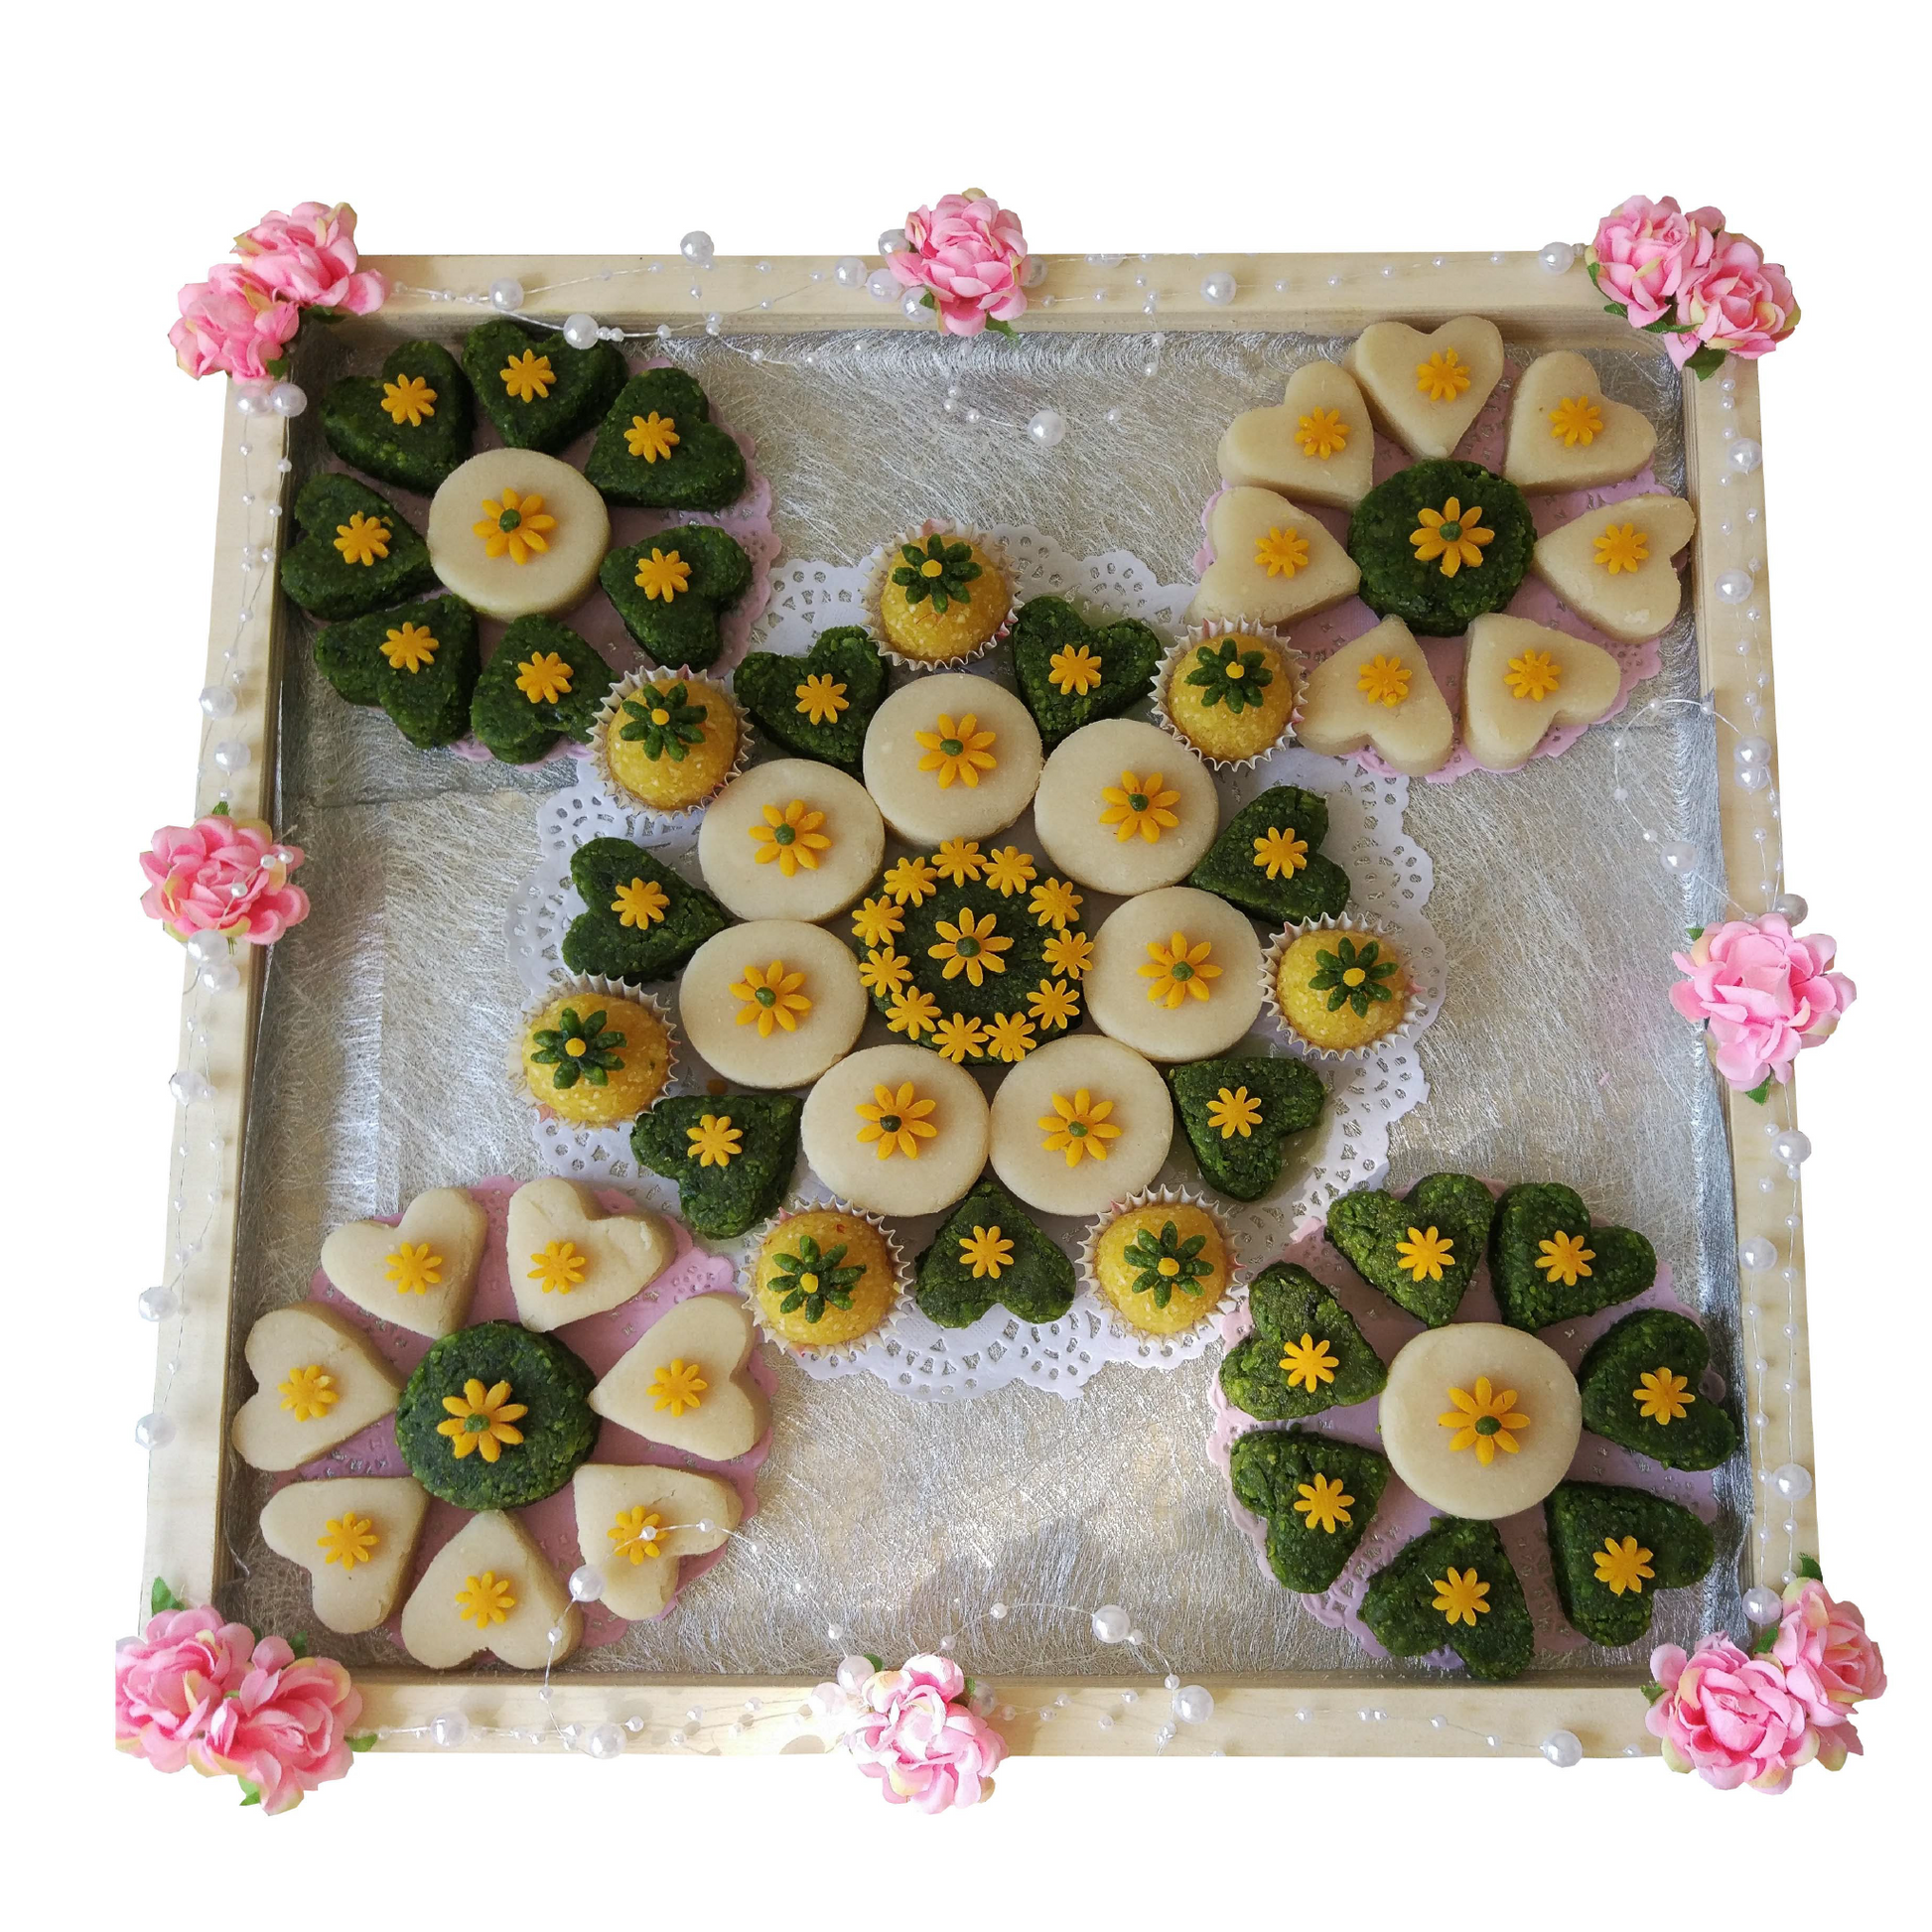 Badam Pista Platter on wooden tray - Vedic Spoons